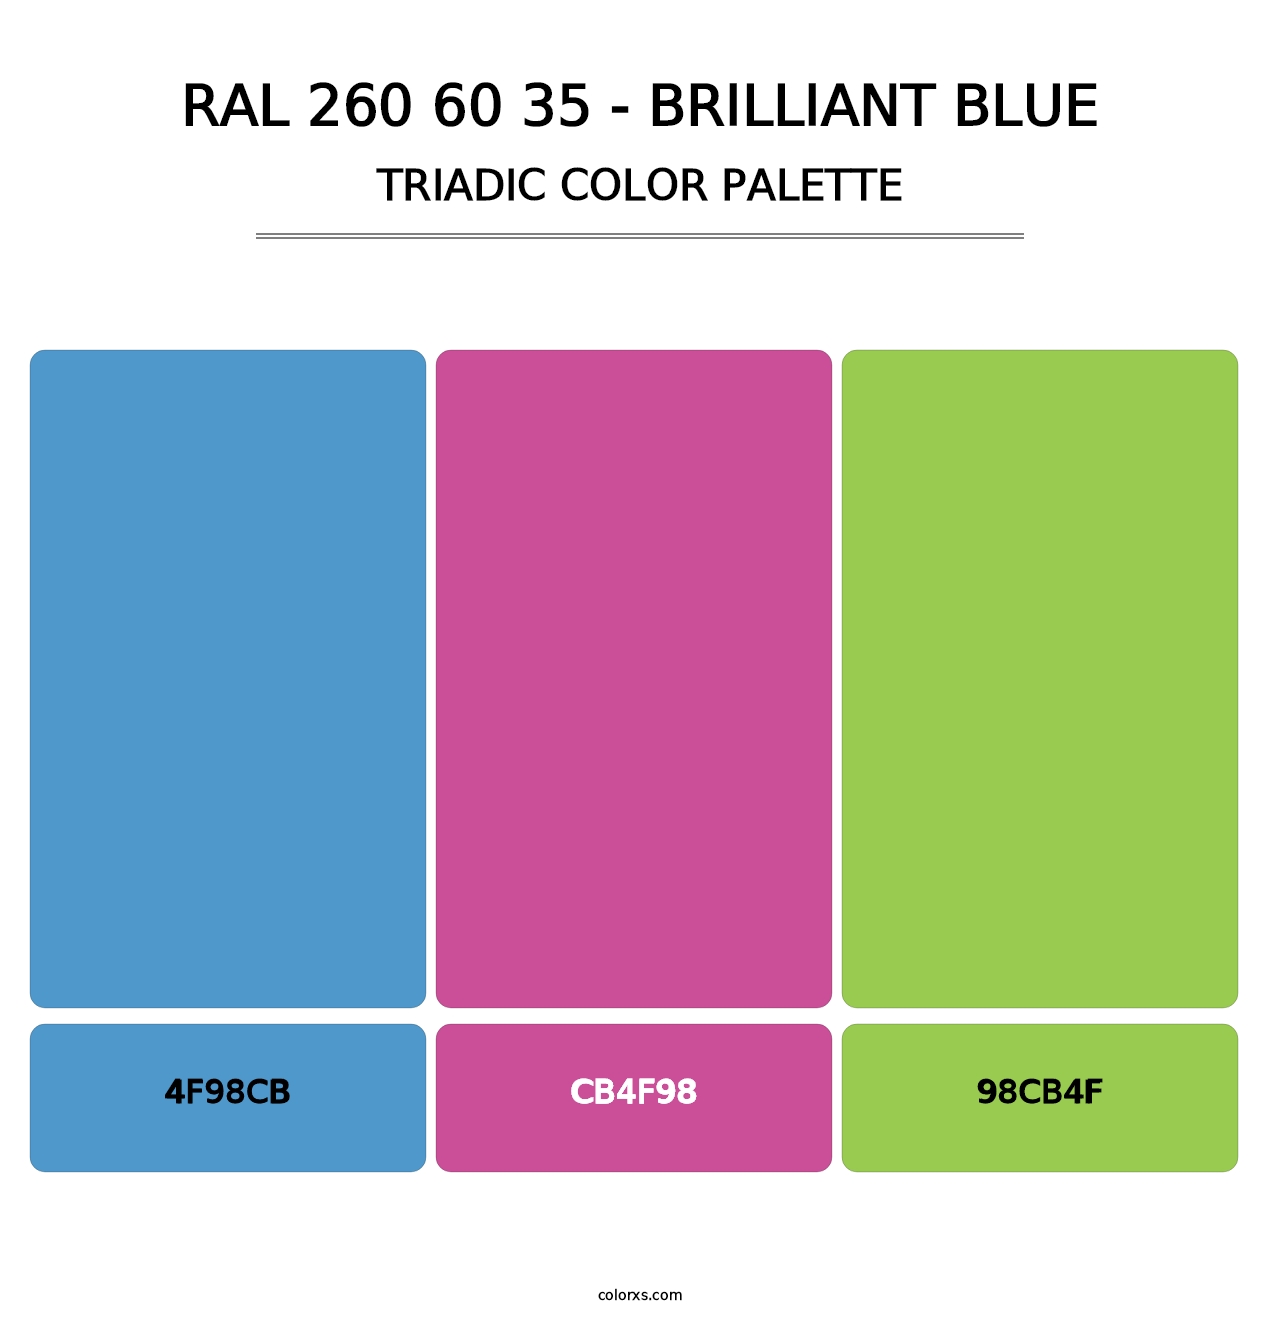 RAL 260 60 35 - Brilliant Blue - Triadic Color Palette